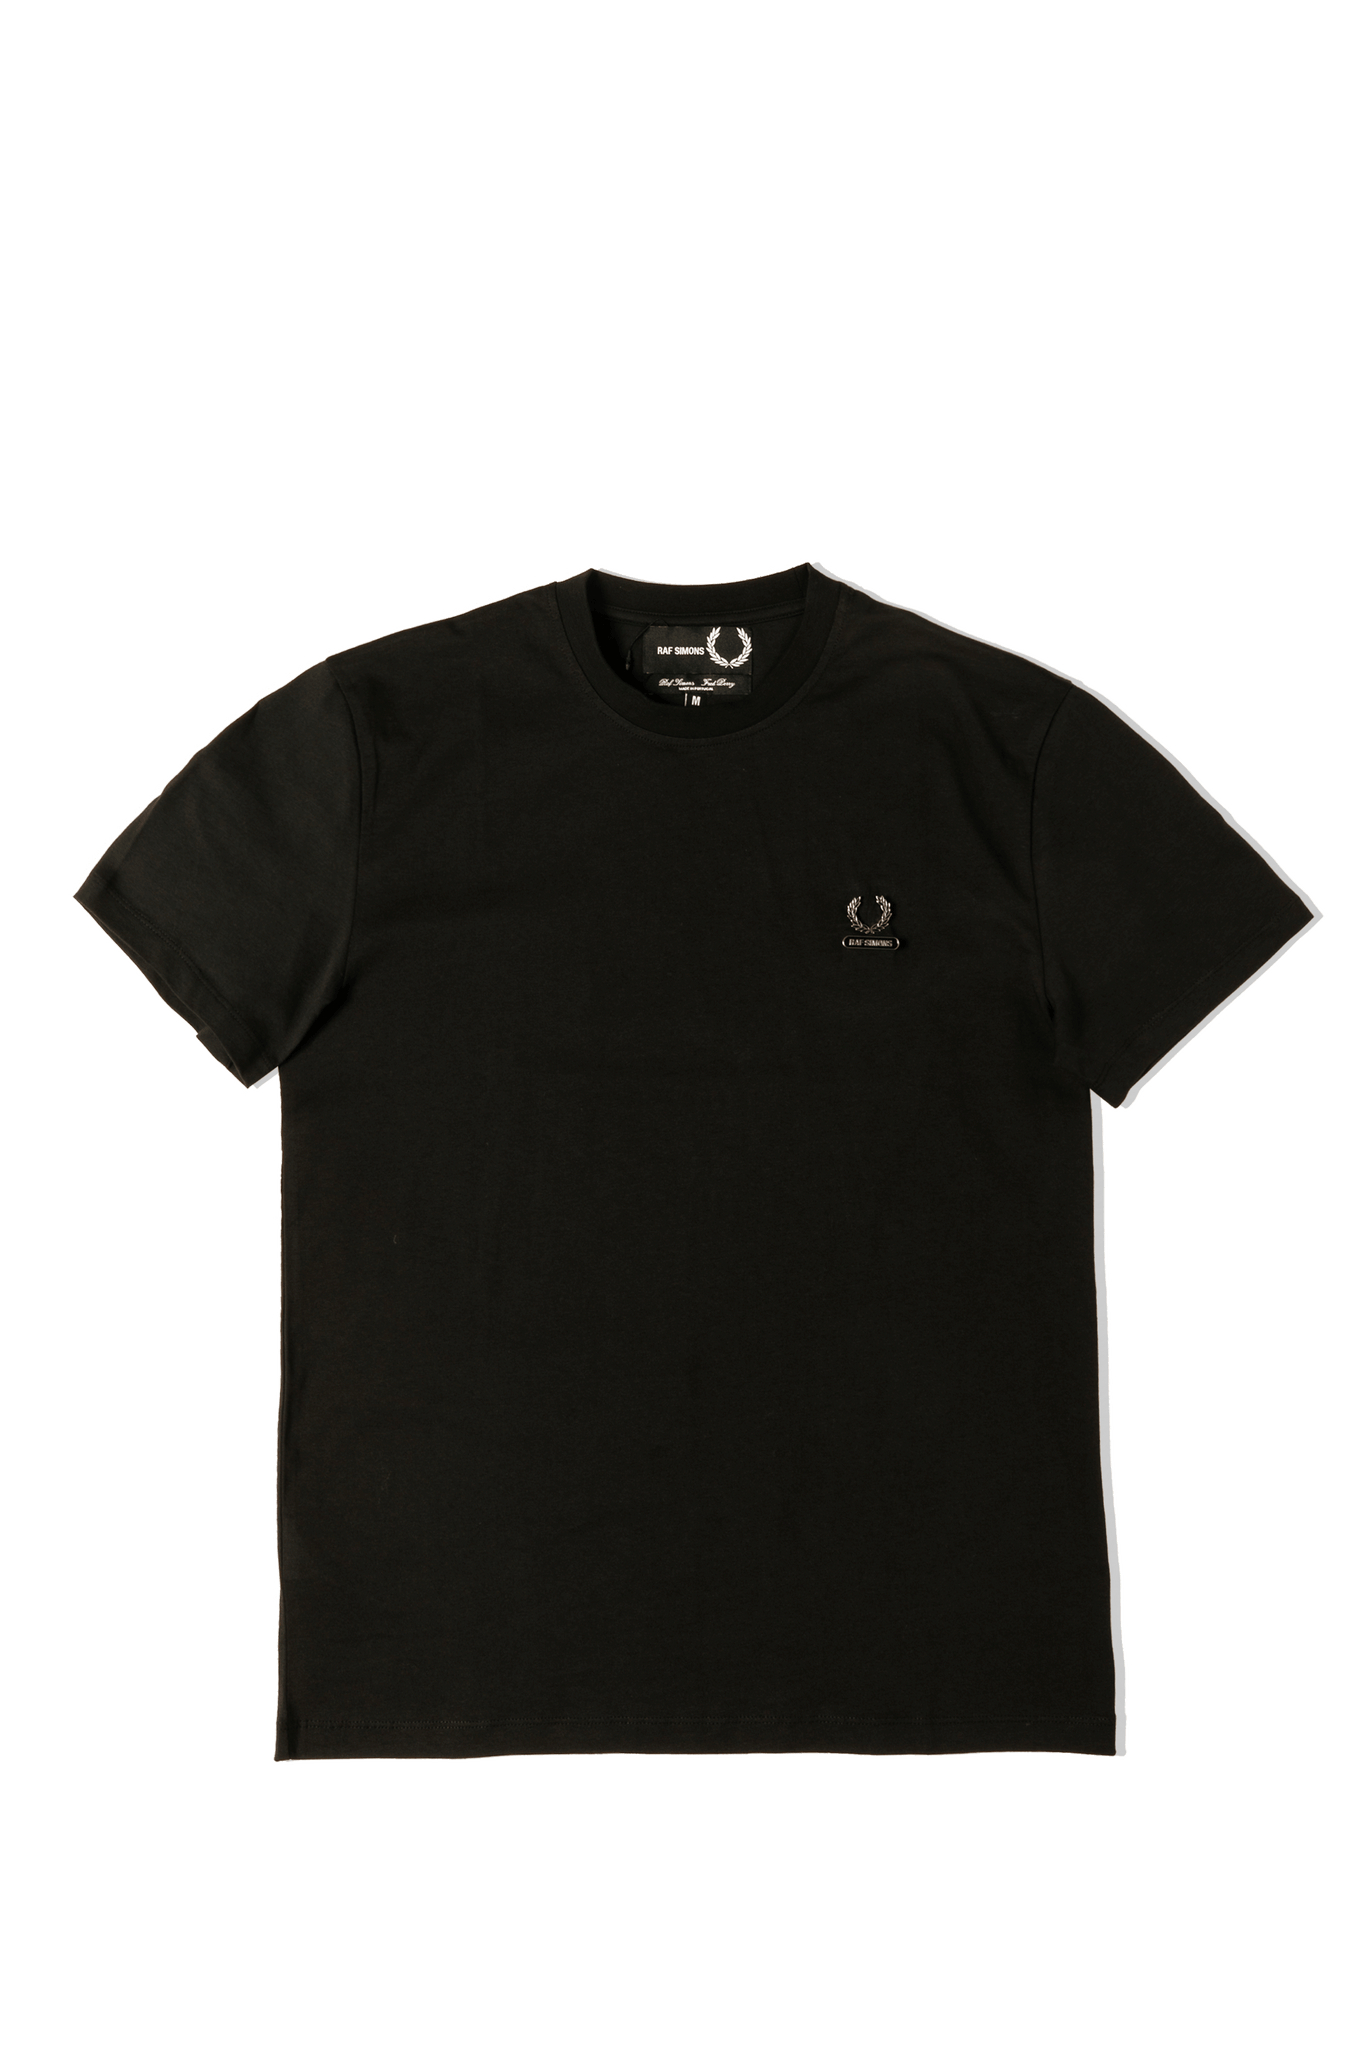 Enamel Pin T-Shirt x Raf Simons